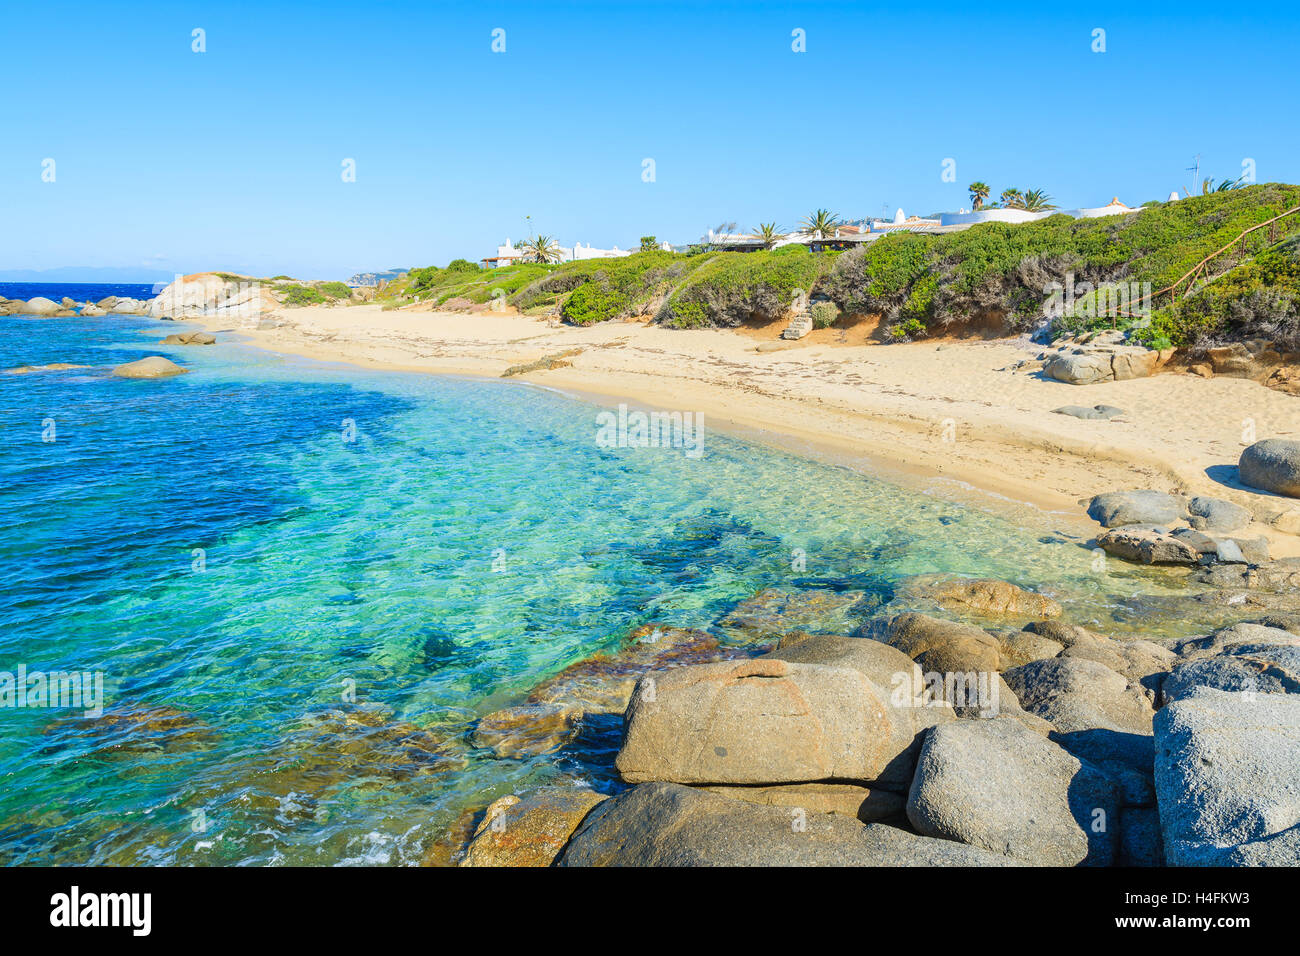 View of Cala Caterina beach and turquoise sea, Sardinia island, Italy Stock Photo